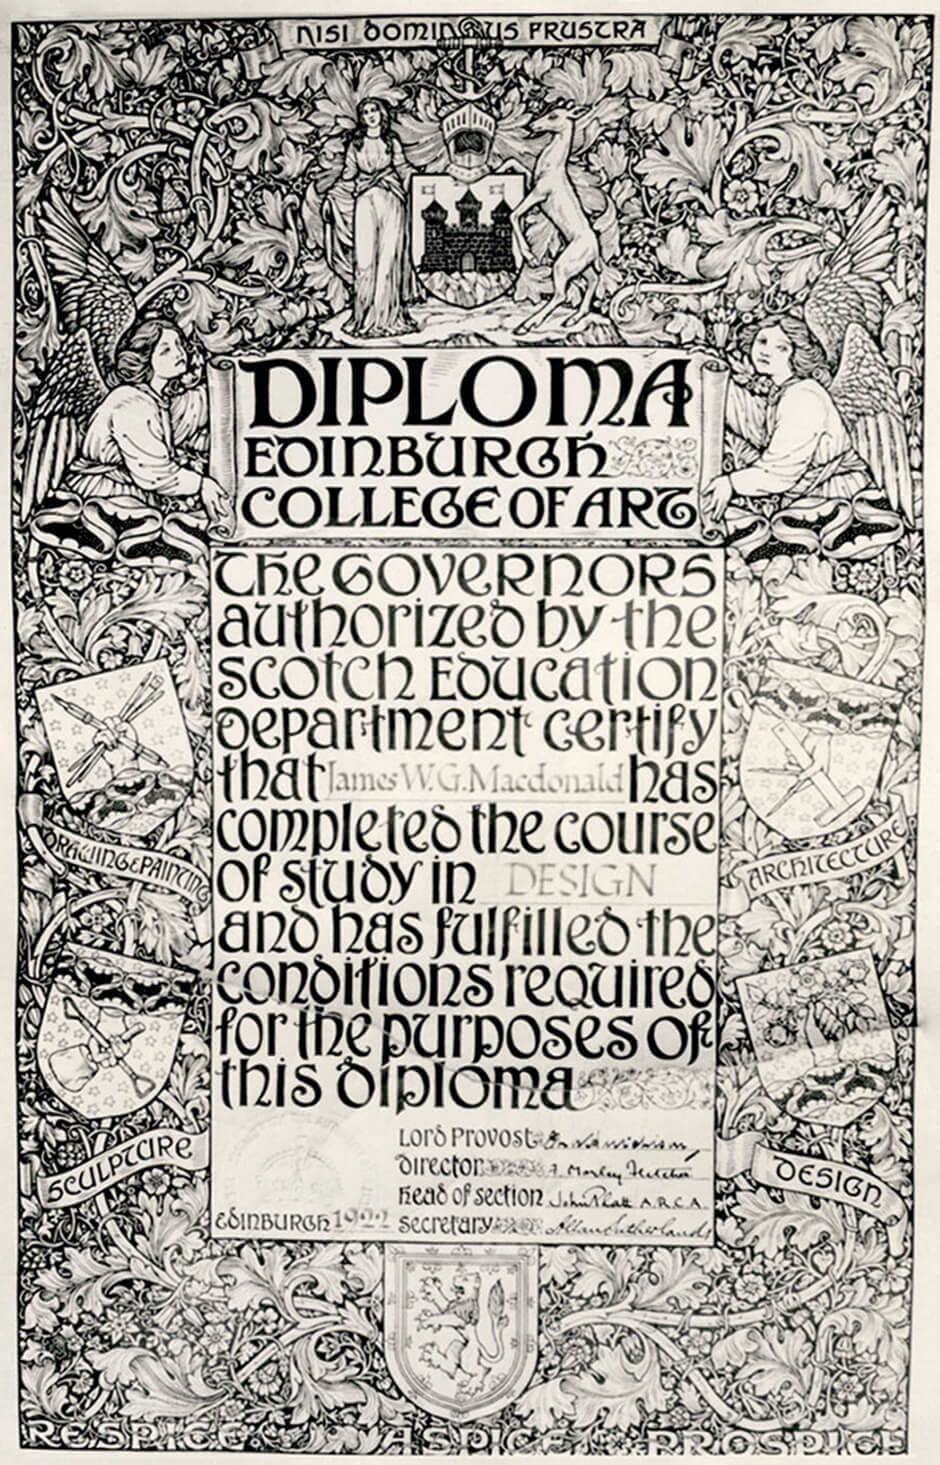 Art Canada Institute, Jock Macdonald, Macdonald's diploma from Edinburgh College of Art, 1922